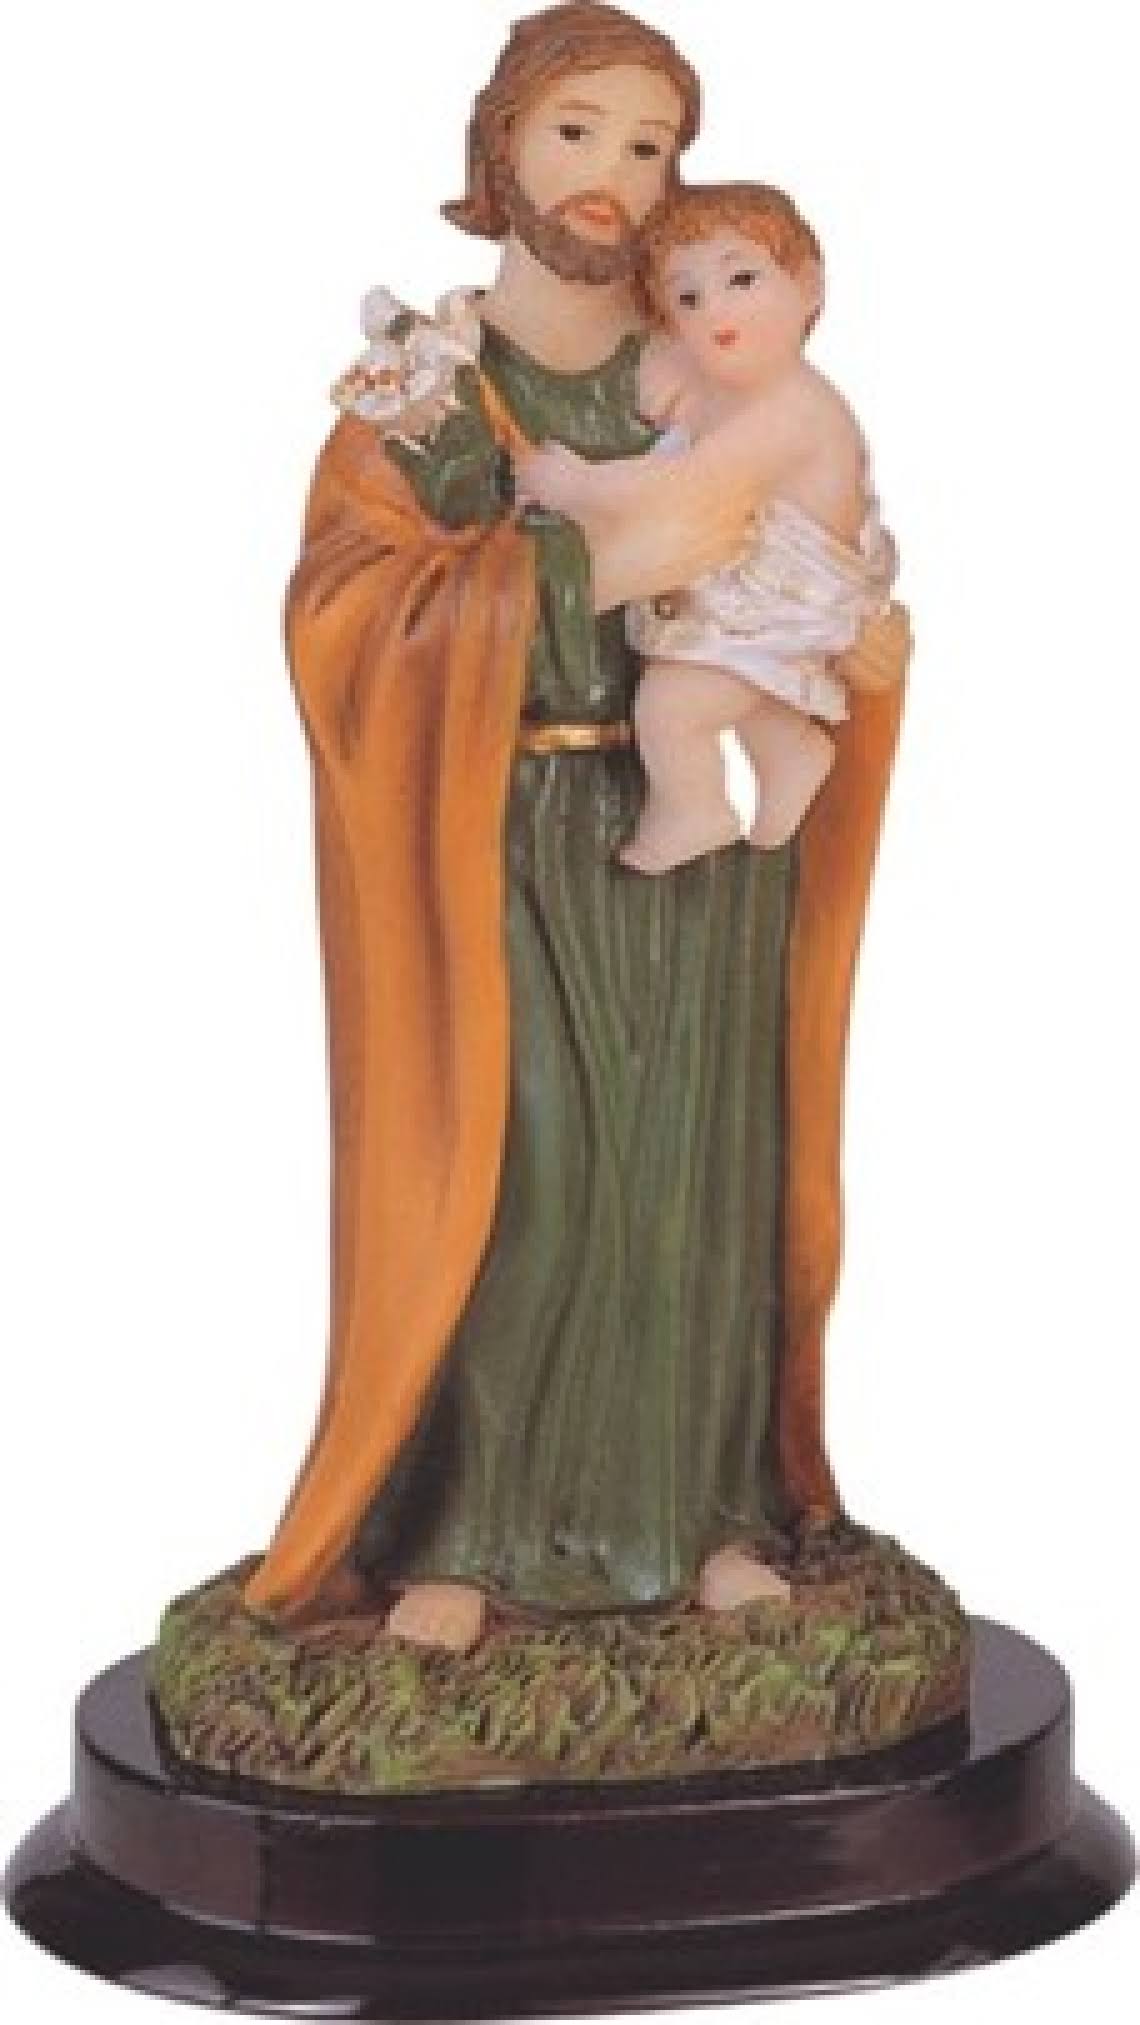 5 inch Saint Joseph Holy Figurine Religious Decoration Statue Decor